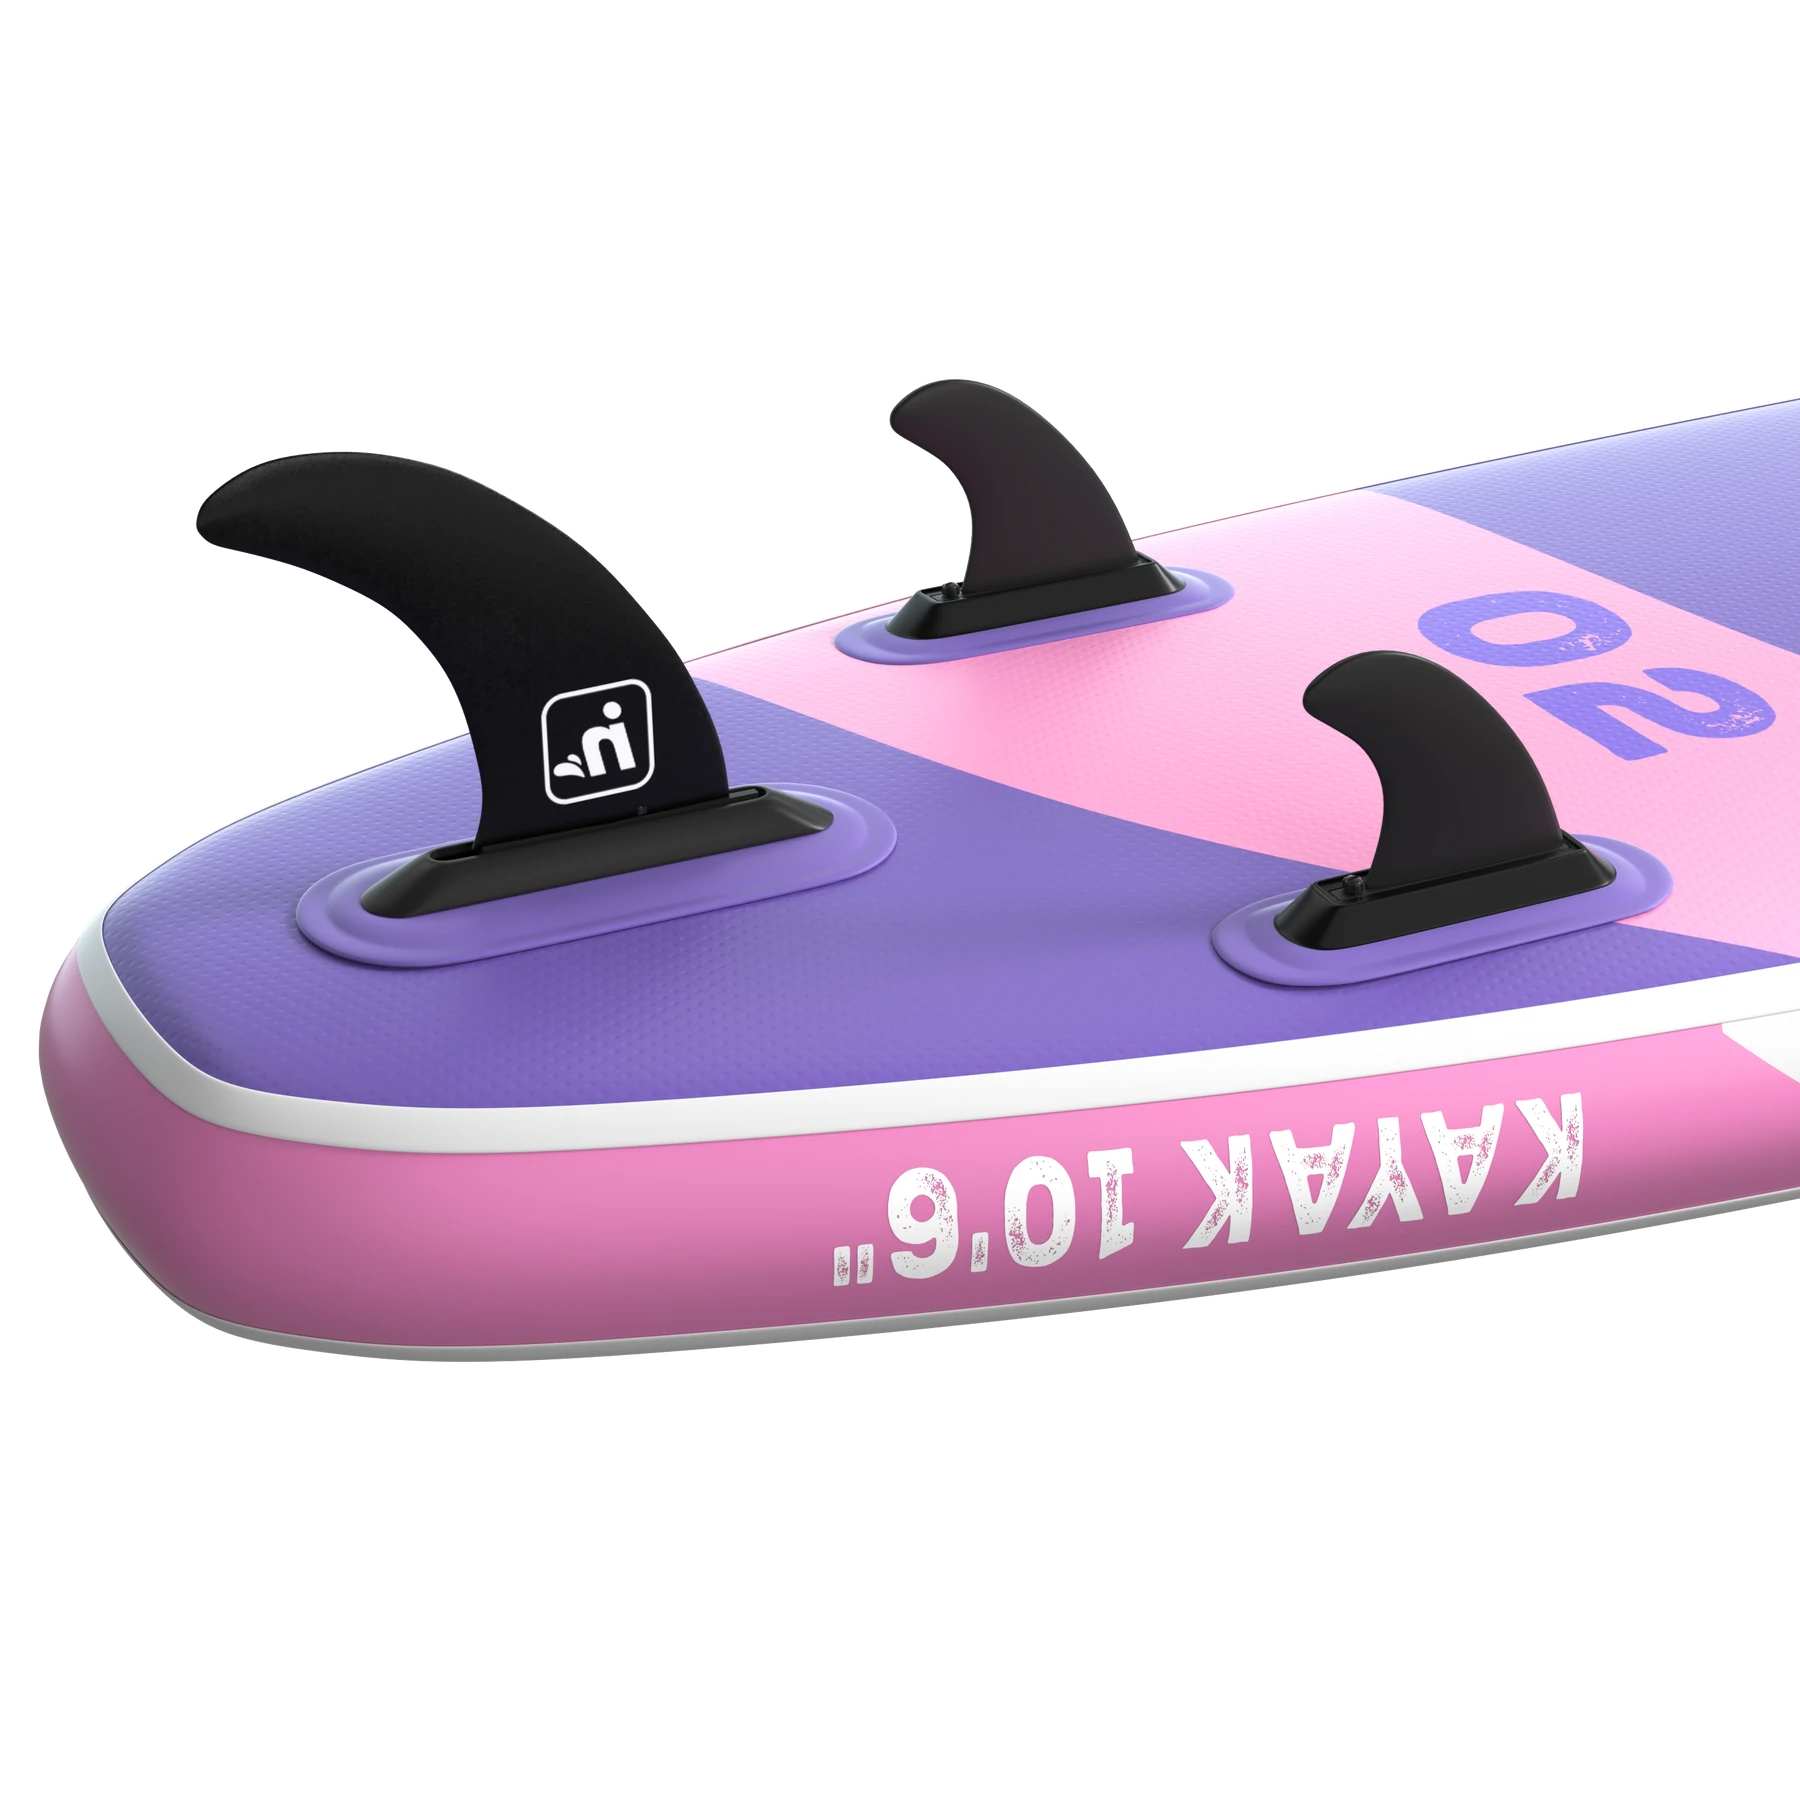 Freein 10'6 Inflatable Kayak SUP Pro